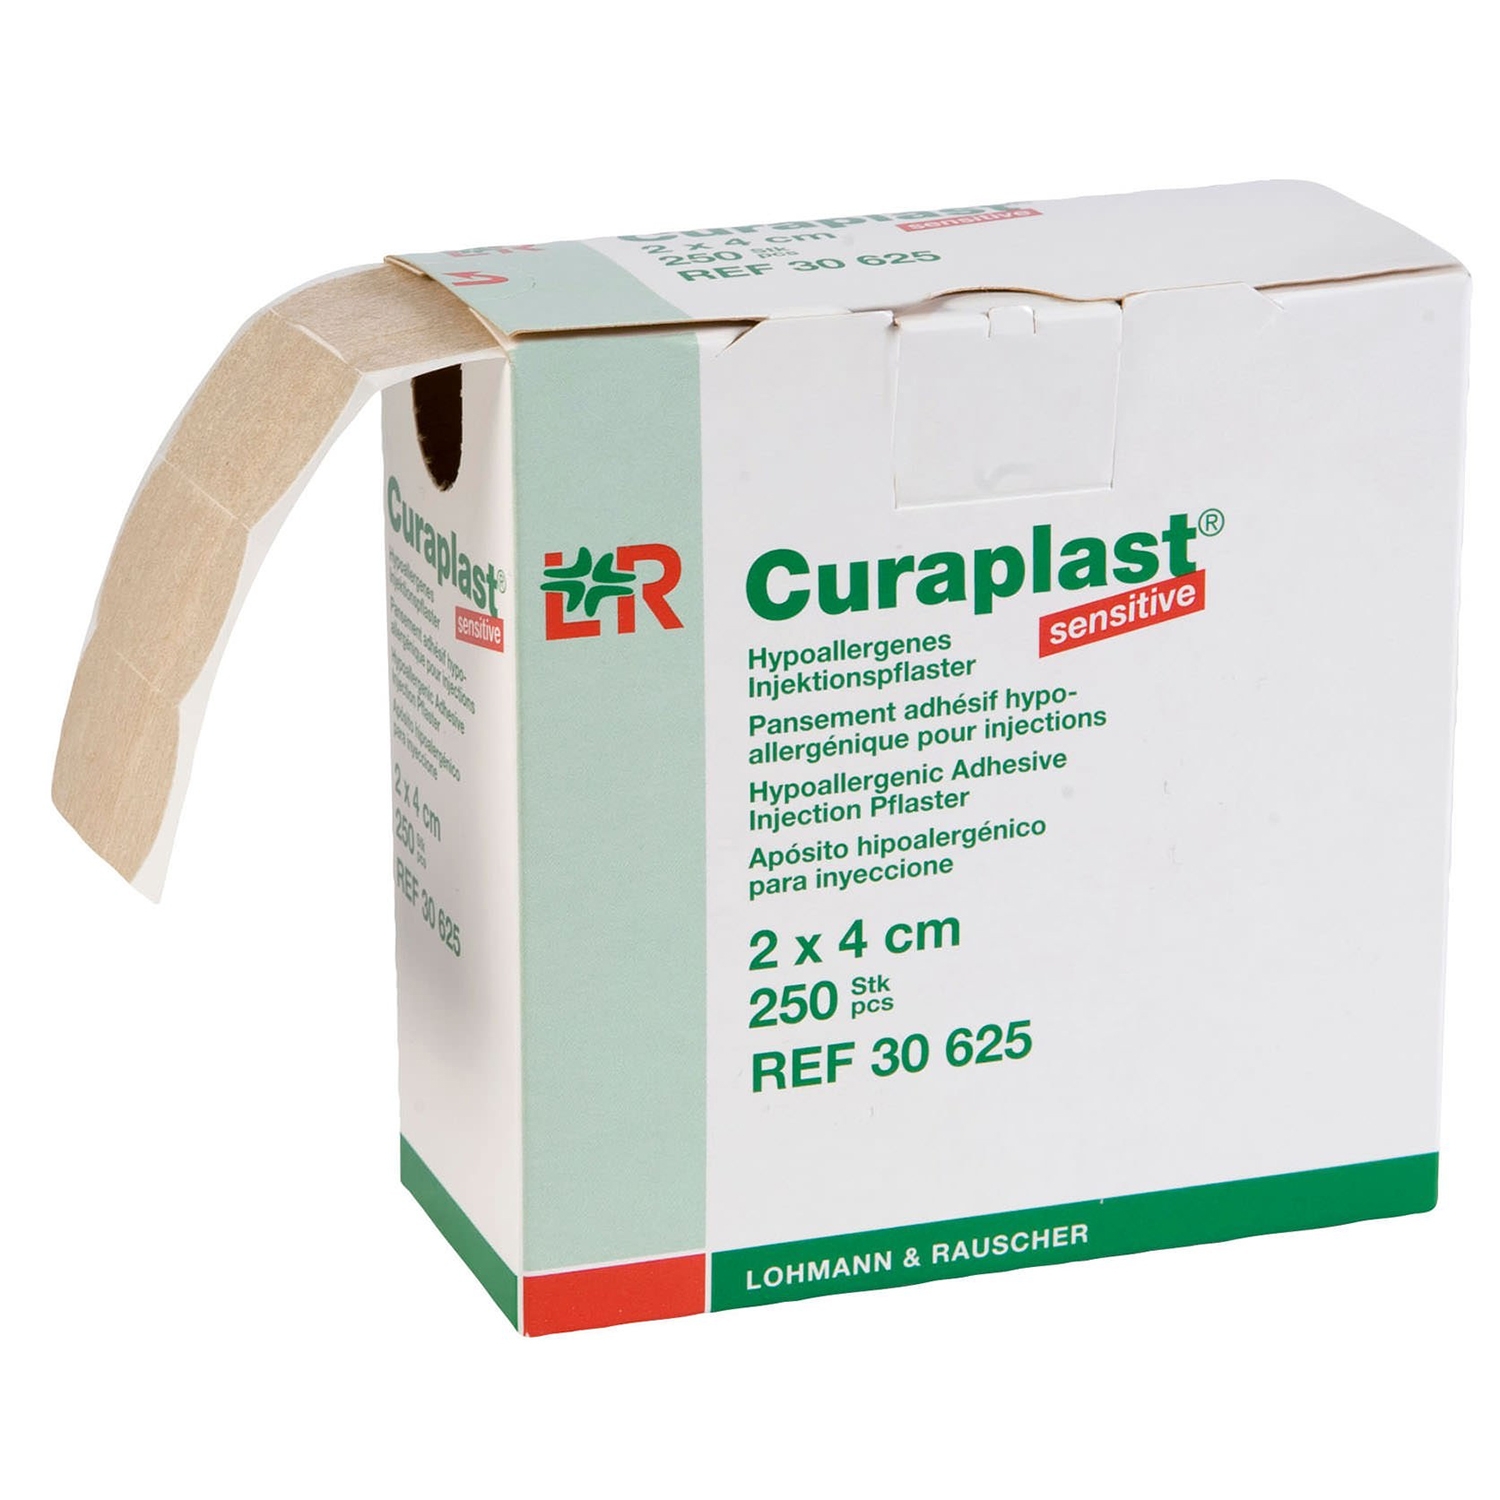 Curaplast sensitive wondpleister strips - 2 x 4 cm (250 st)